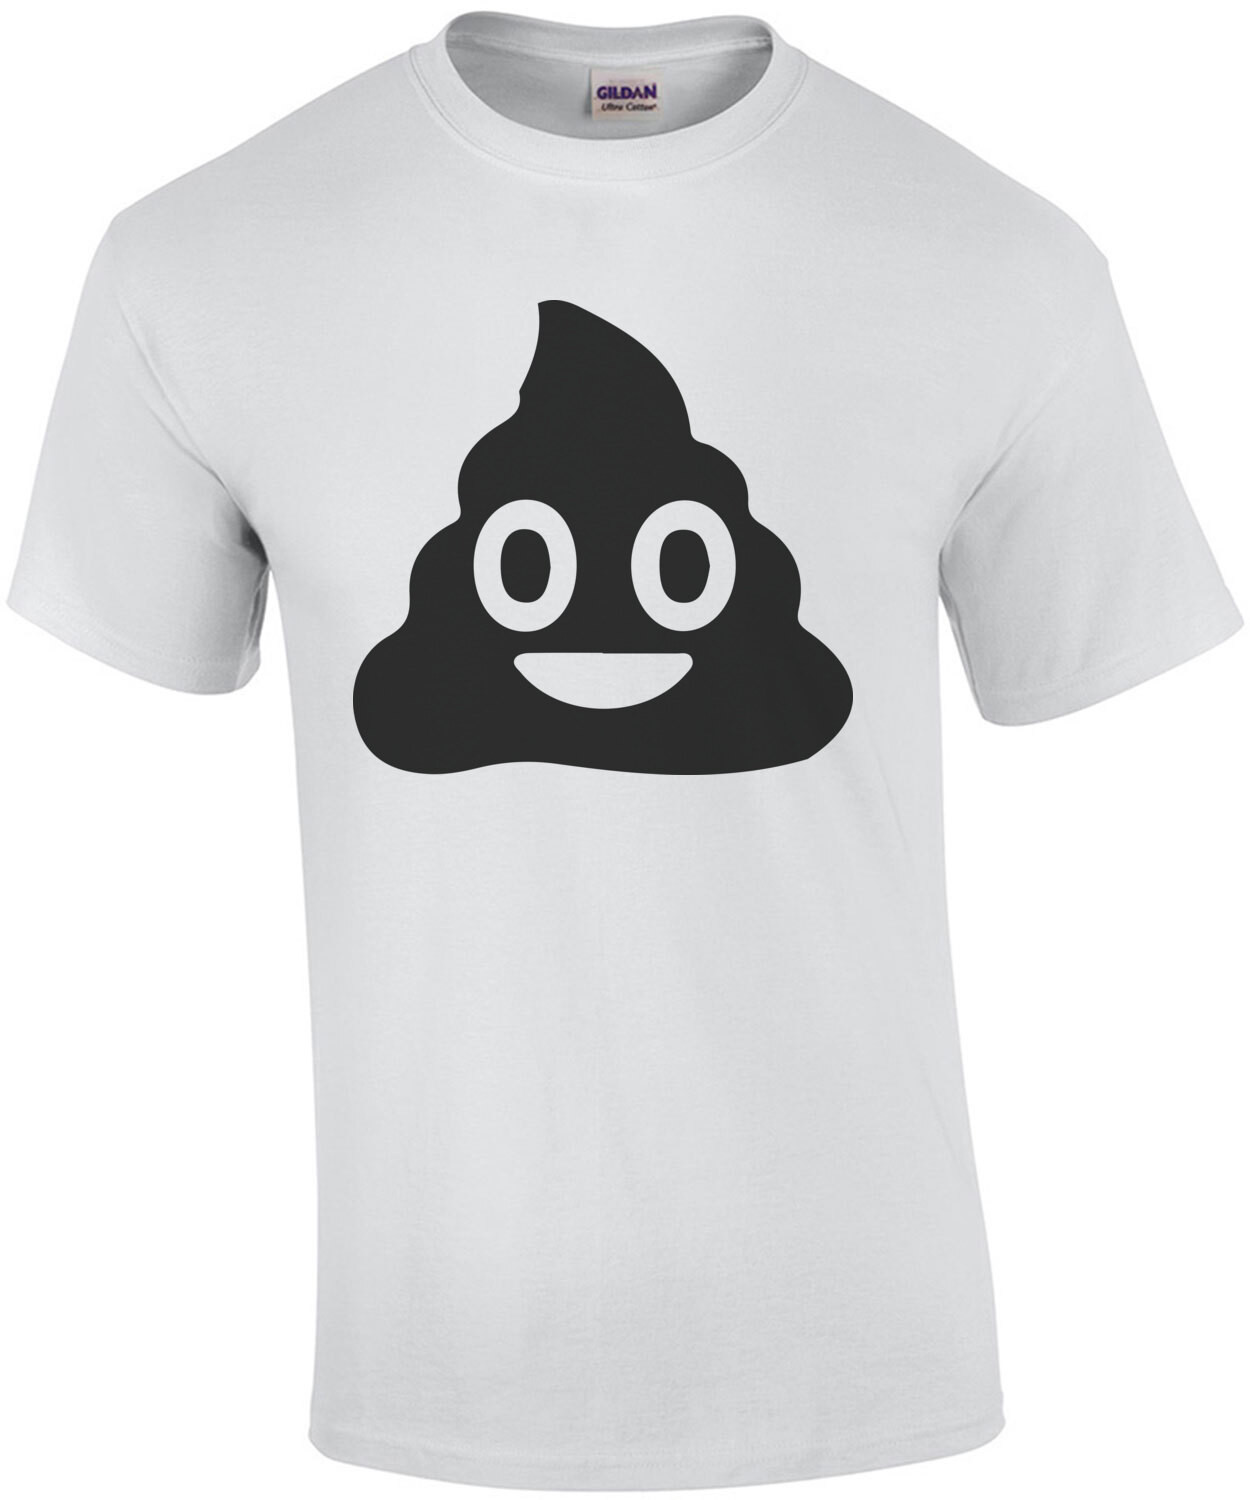 Poop Emoji T-Shirt